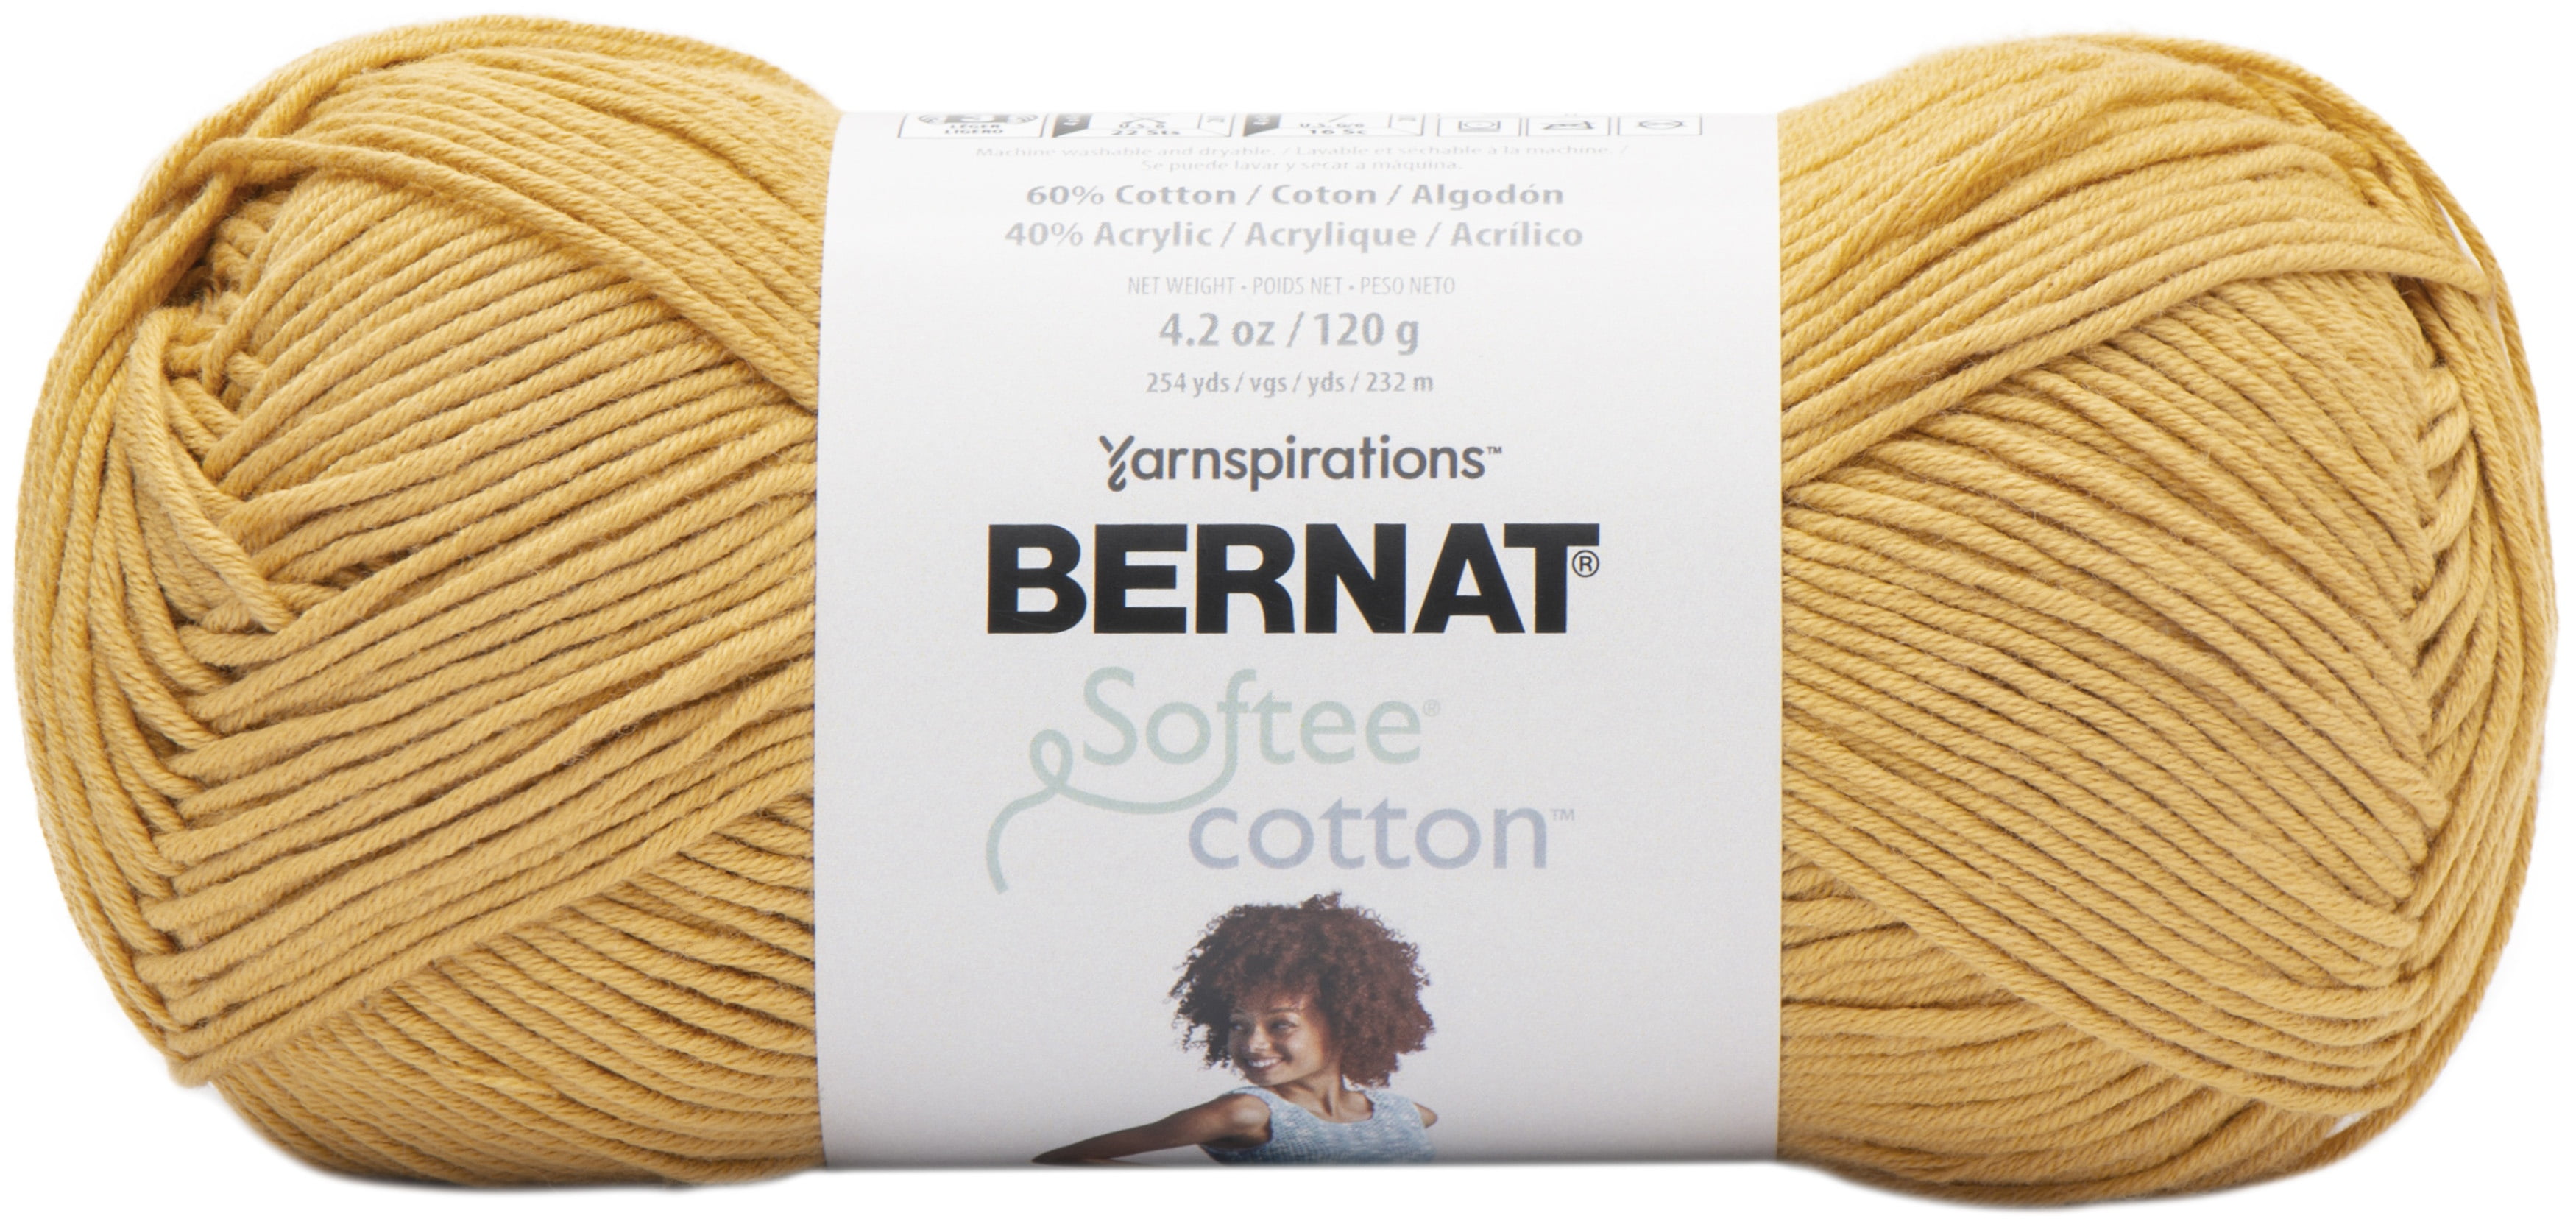  Bernat Softee Cotton Yarn, Feather Gray